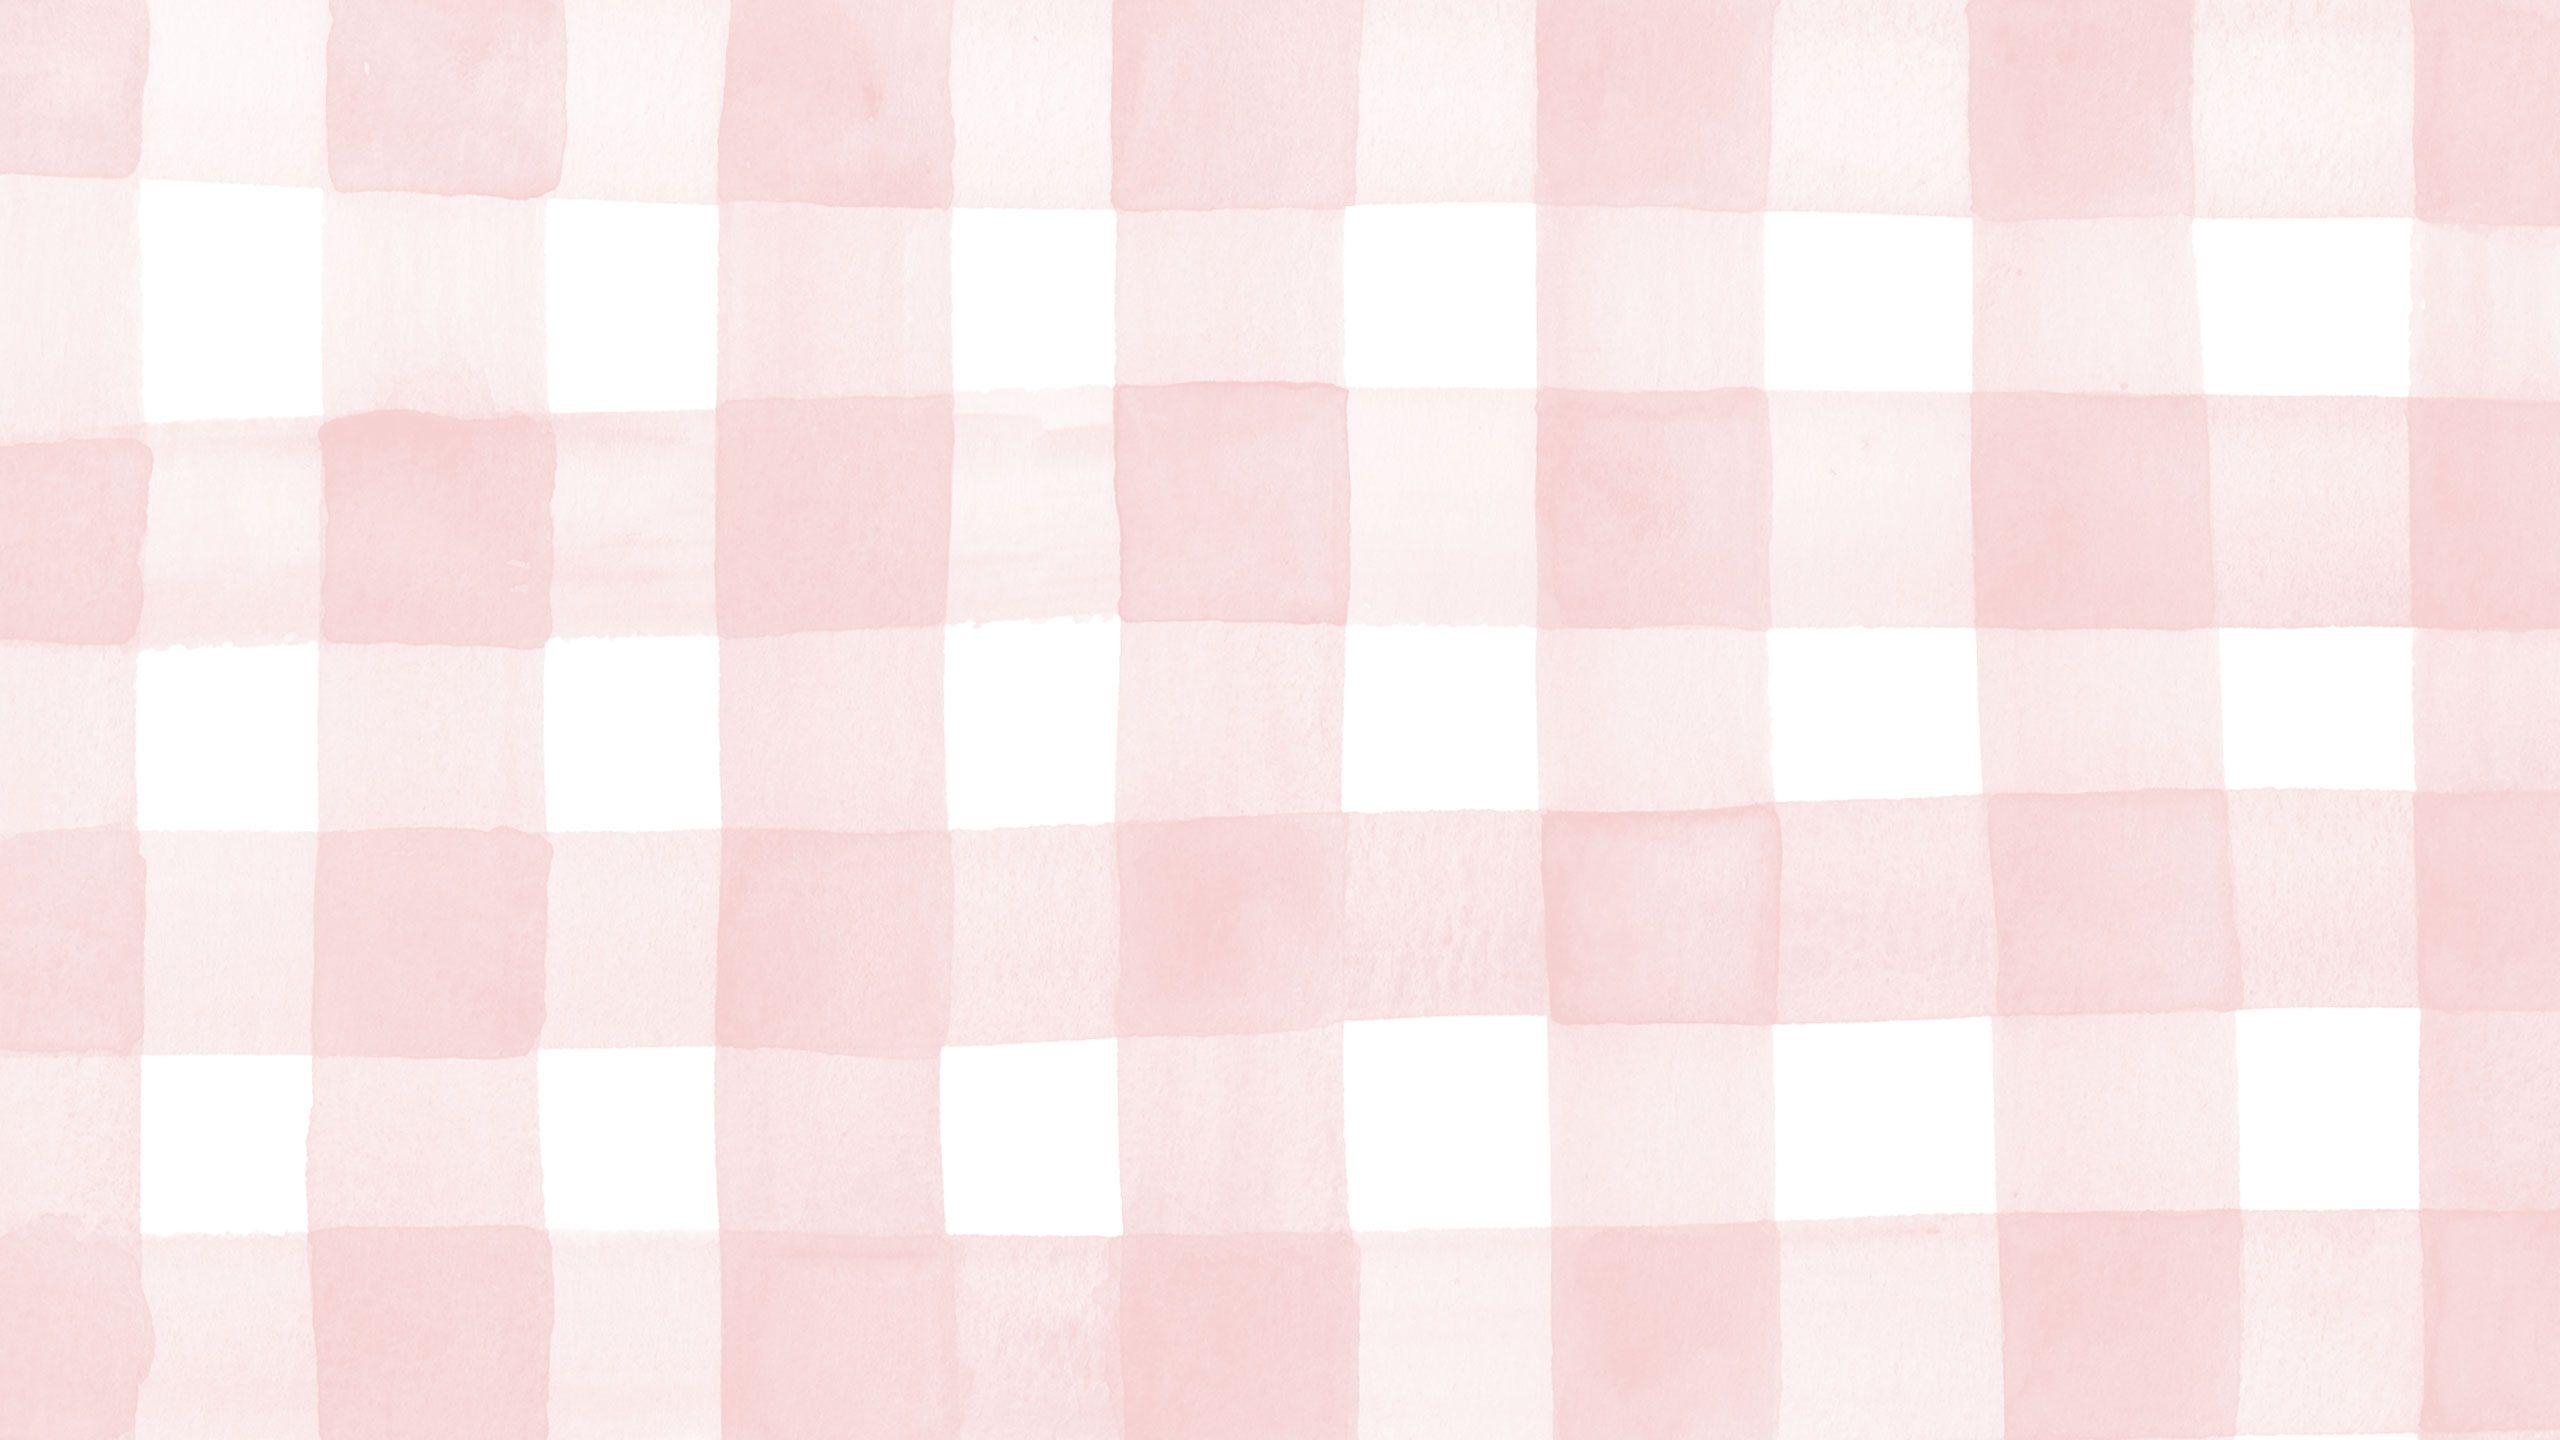 Aesthetic Pink Desktop Wallpapers - Top Free Aesthetic ...